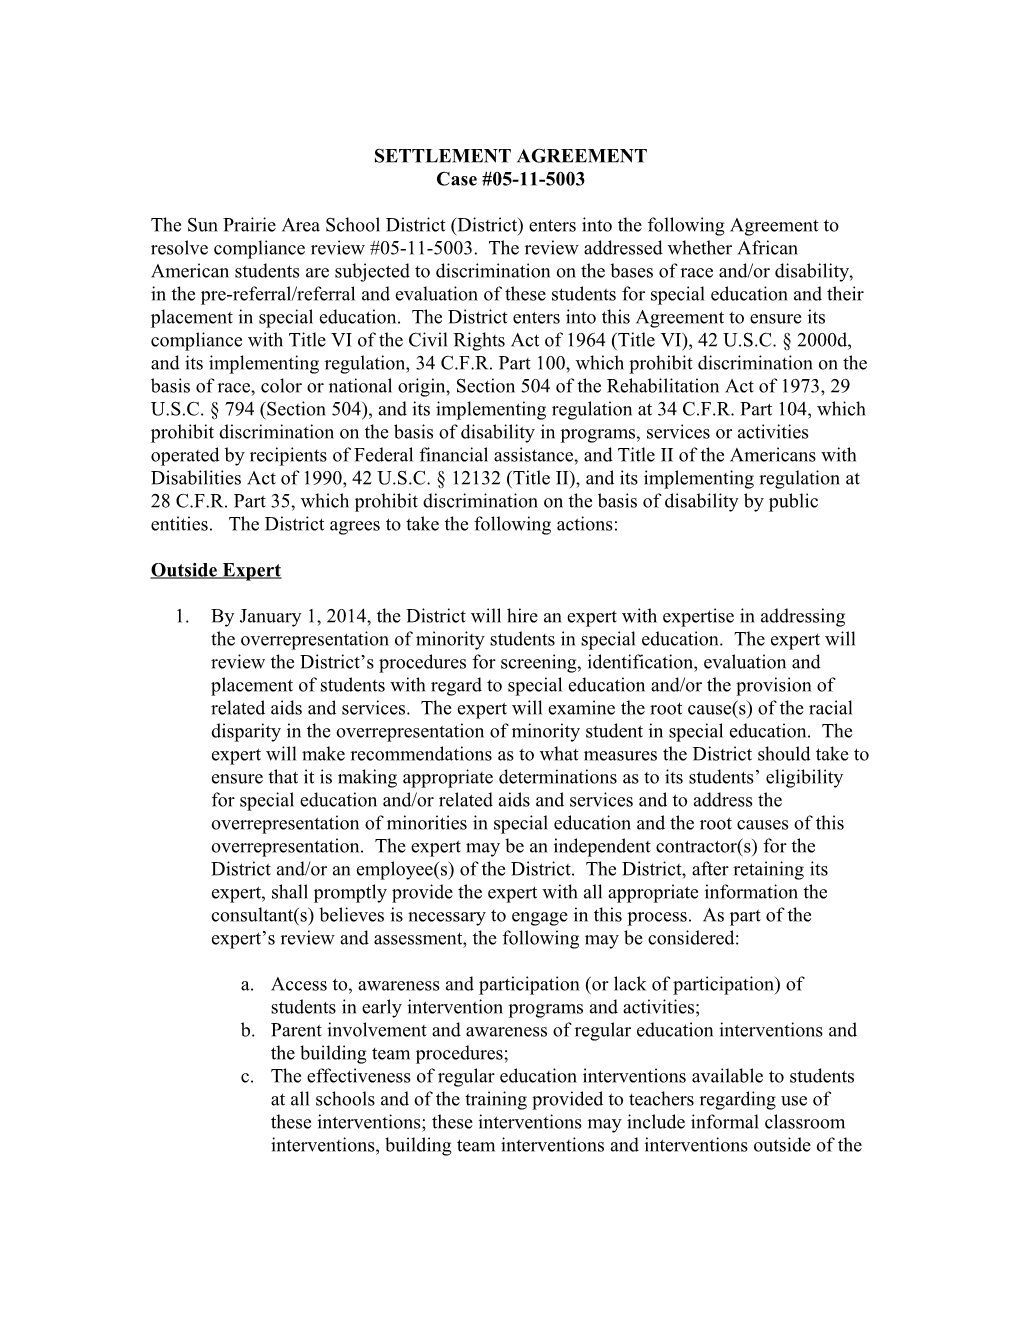 Resolution Agreement, Sun Prairie School District, Wisconsin: Compliance Review #05-11-5003